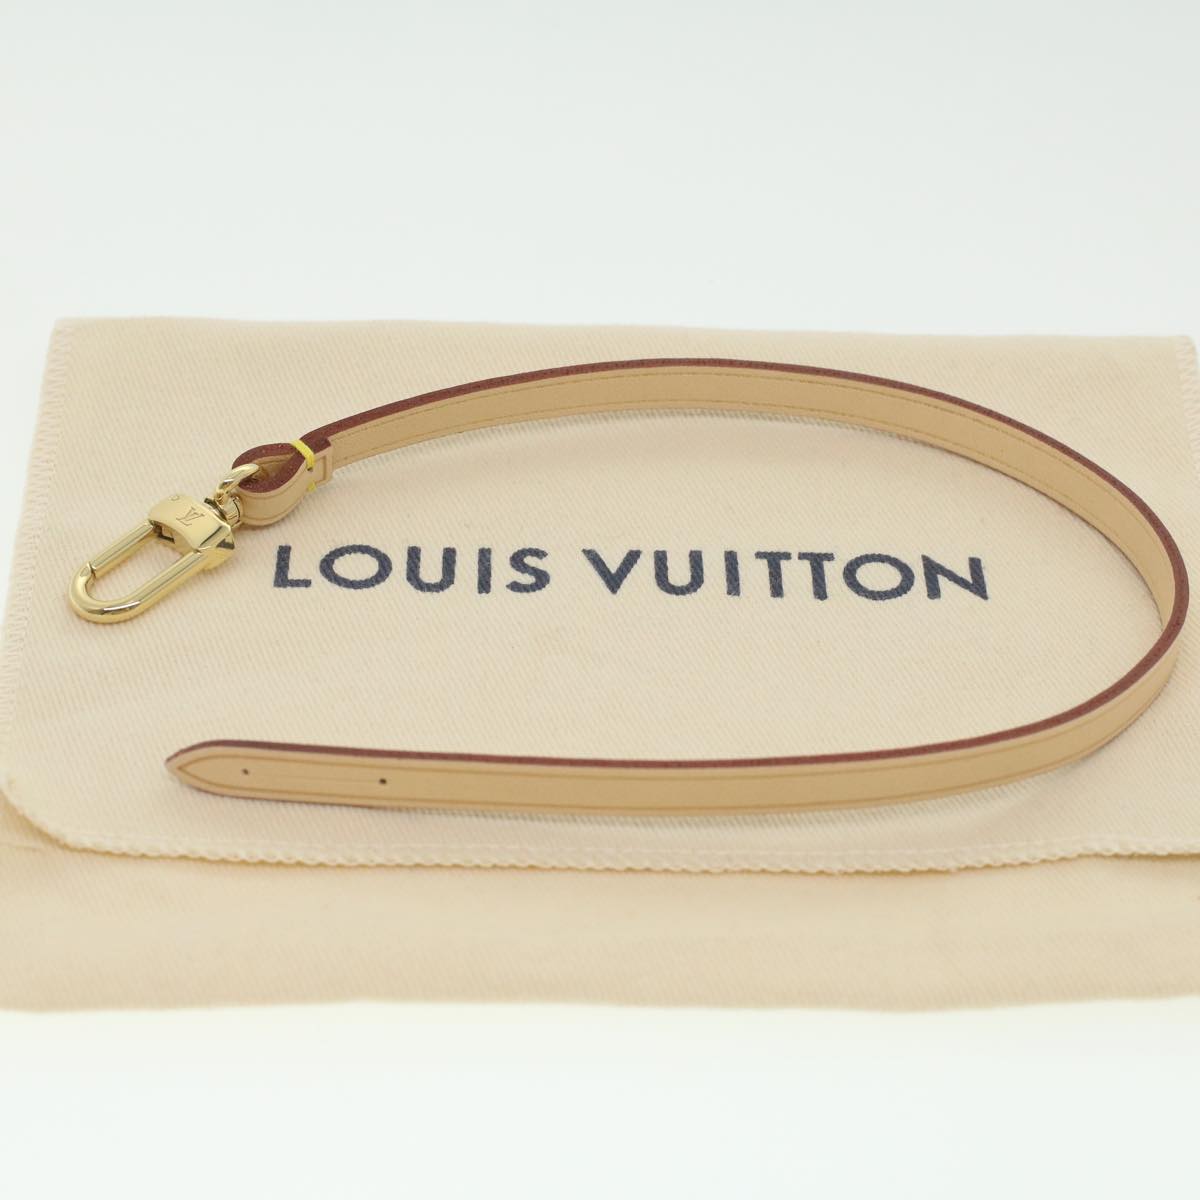 LOUIS VUITTON Strap Leather 12.6"" Beige LV Auth tb536